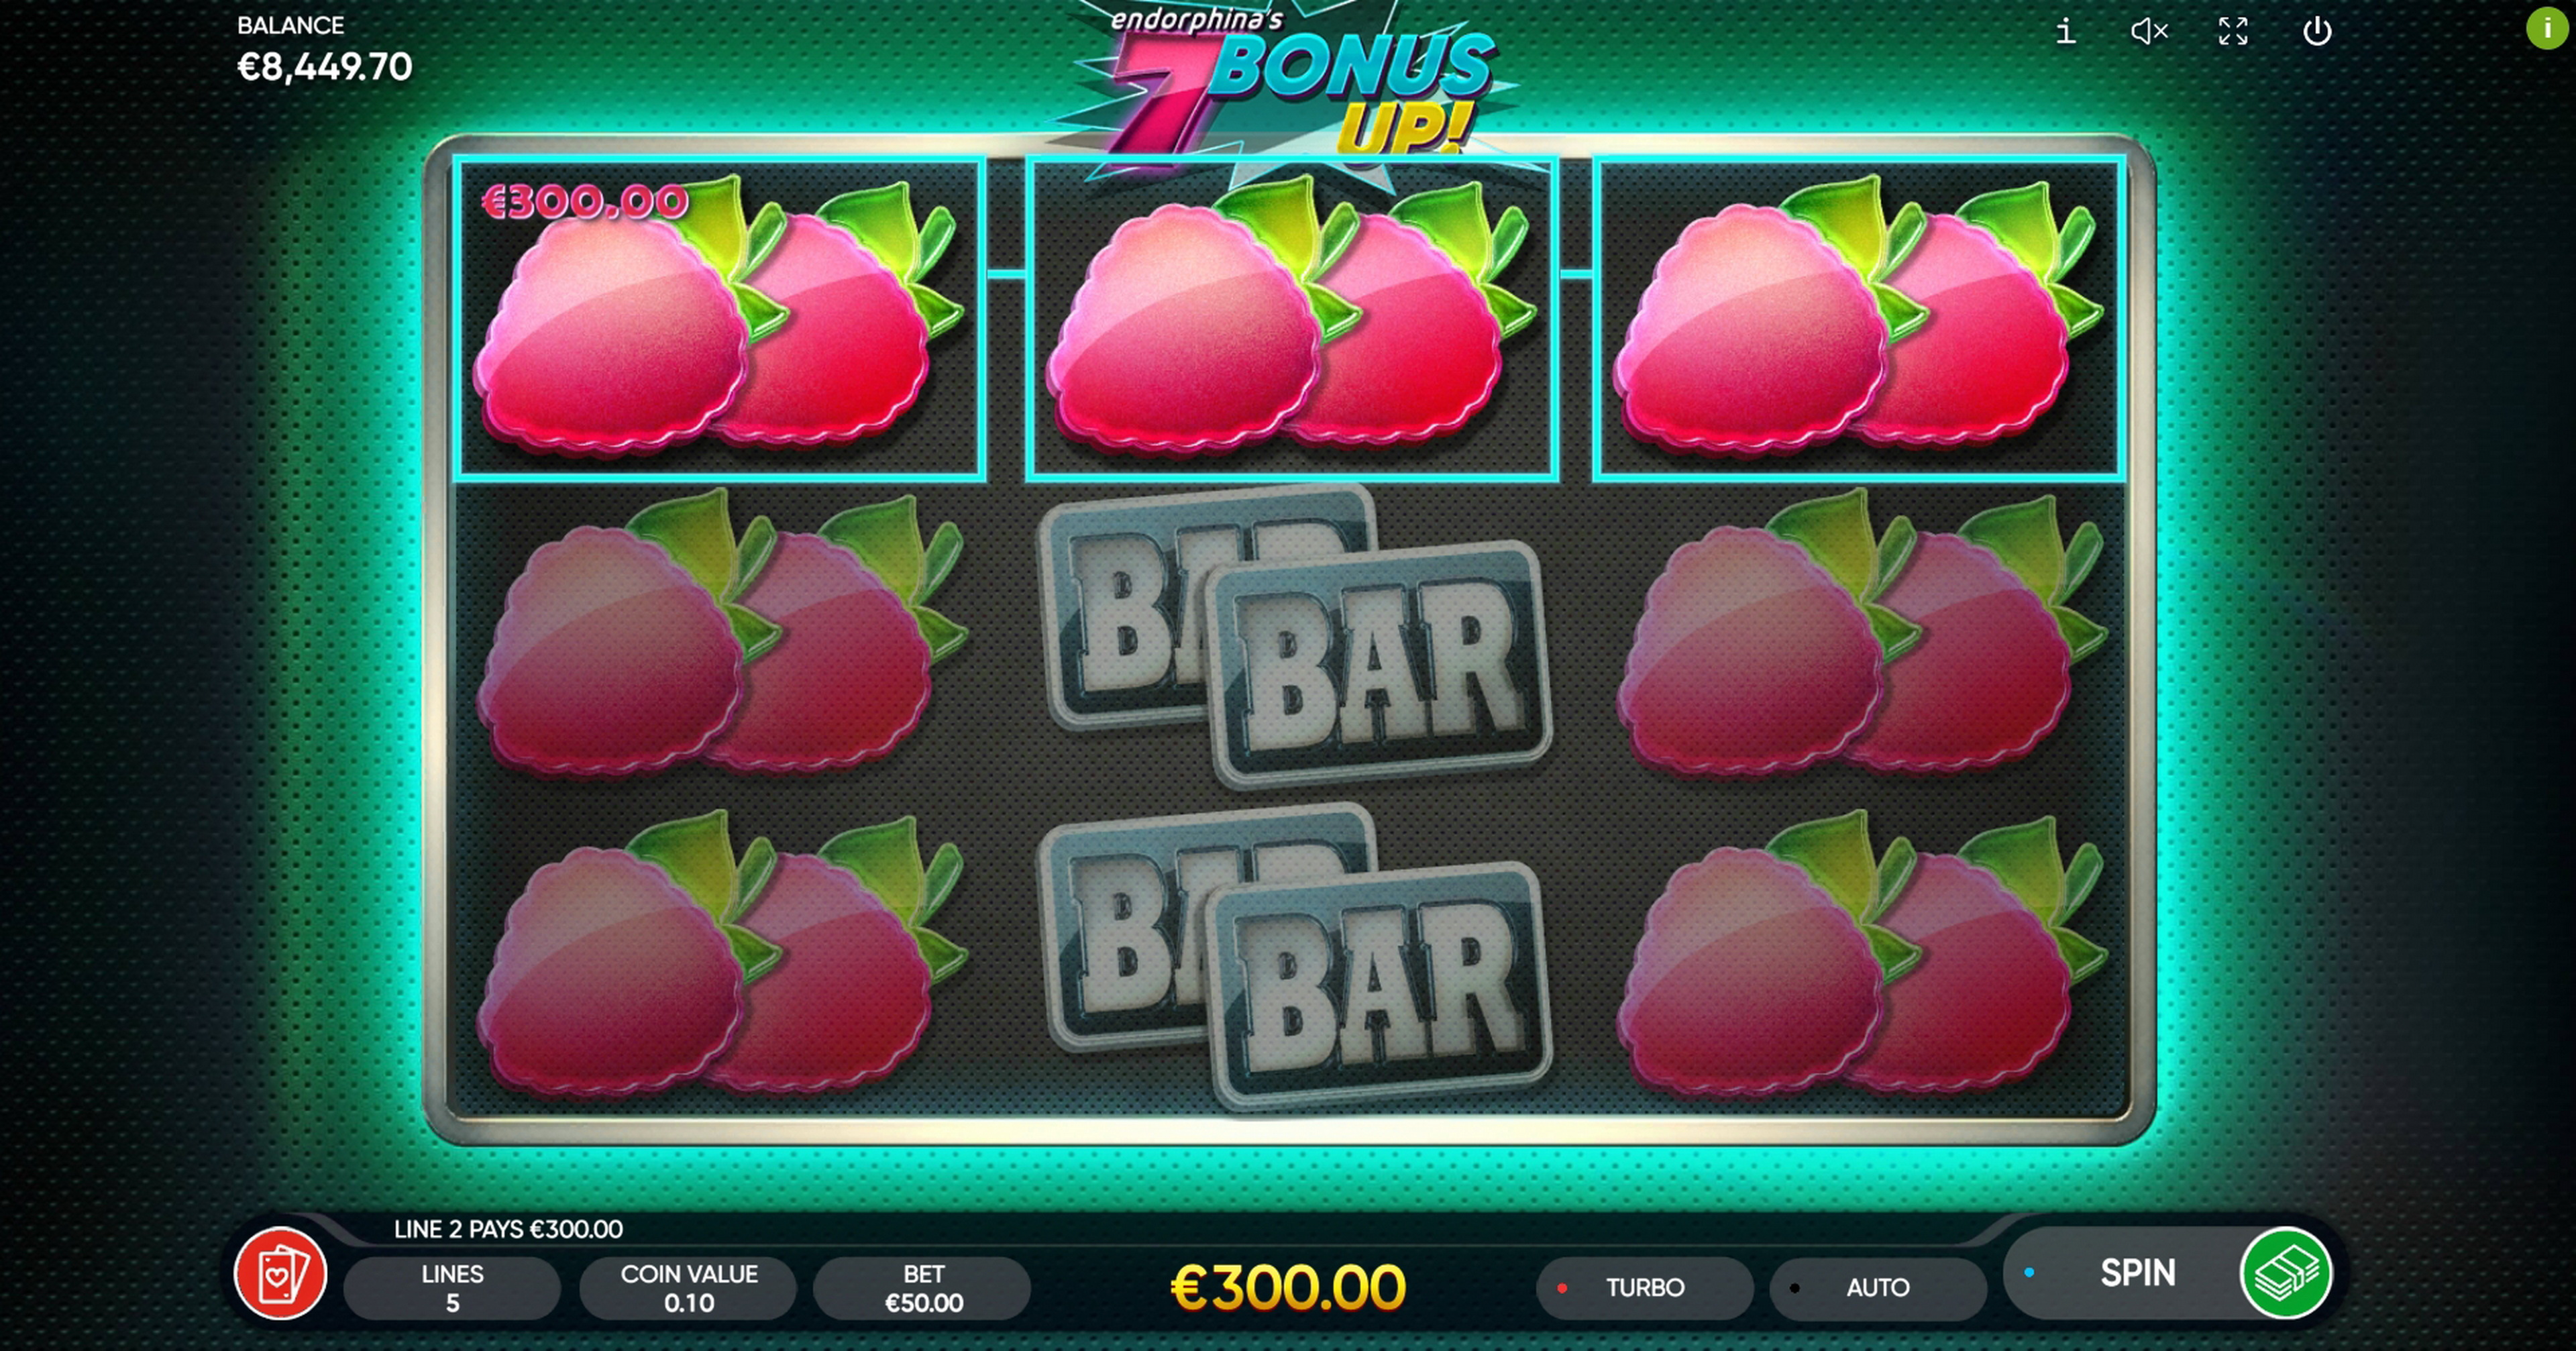 Win Money in 7 Bonus Up Free Slot Game by Endorphina